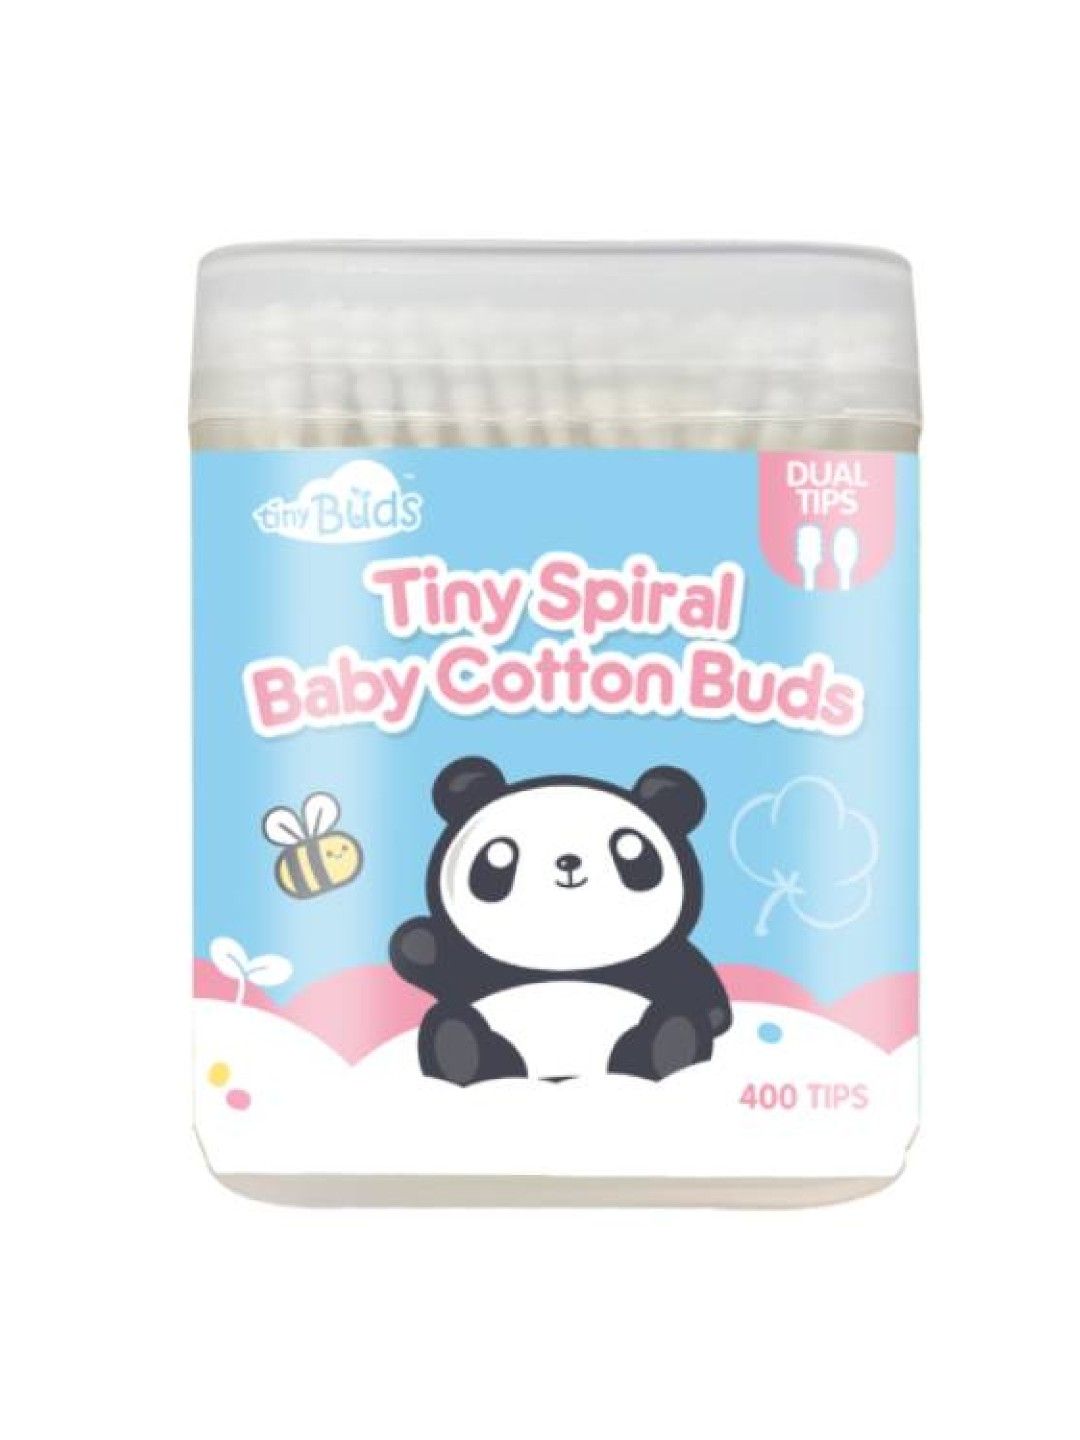 Tiny Buds Tiny Spiral Baby Cotton Buds (400 Tips)